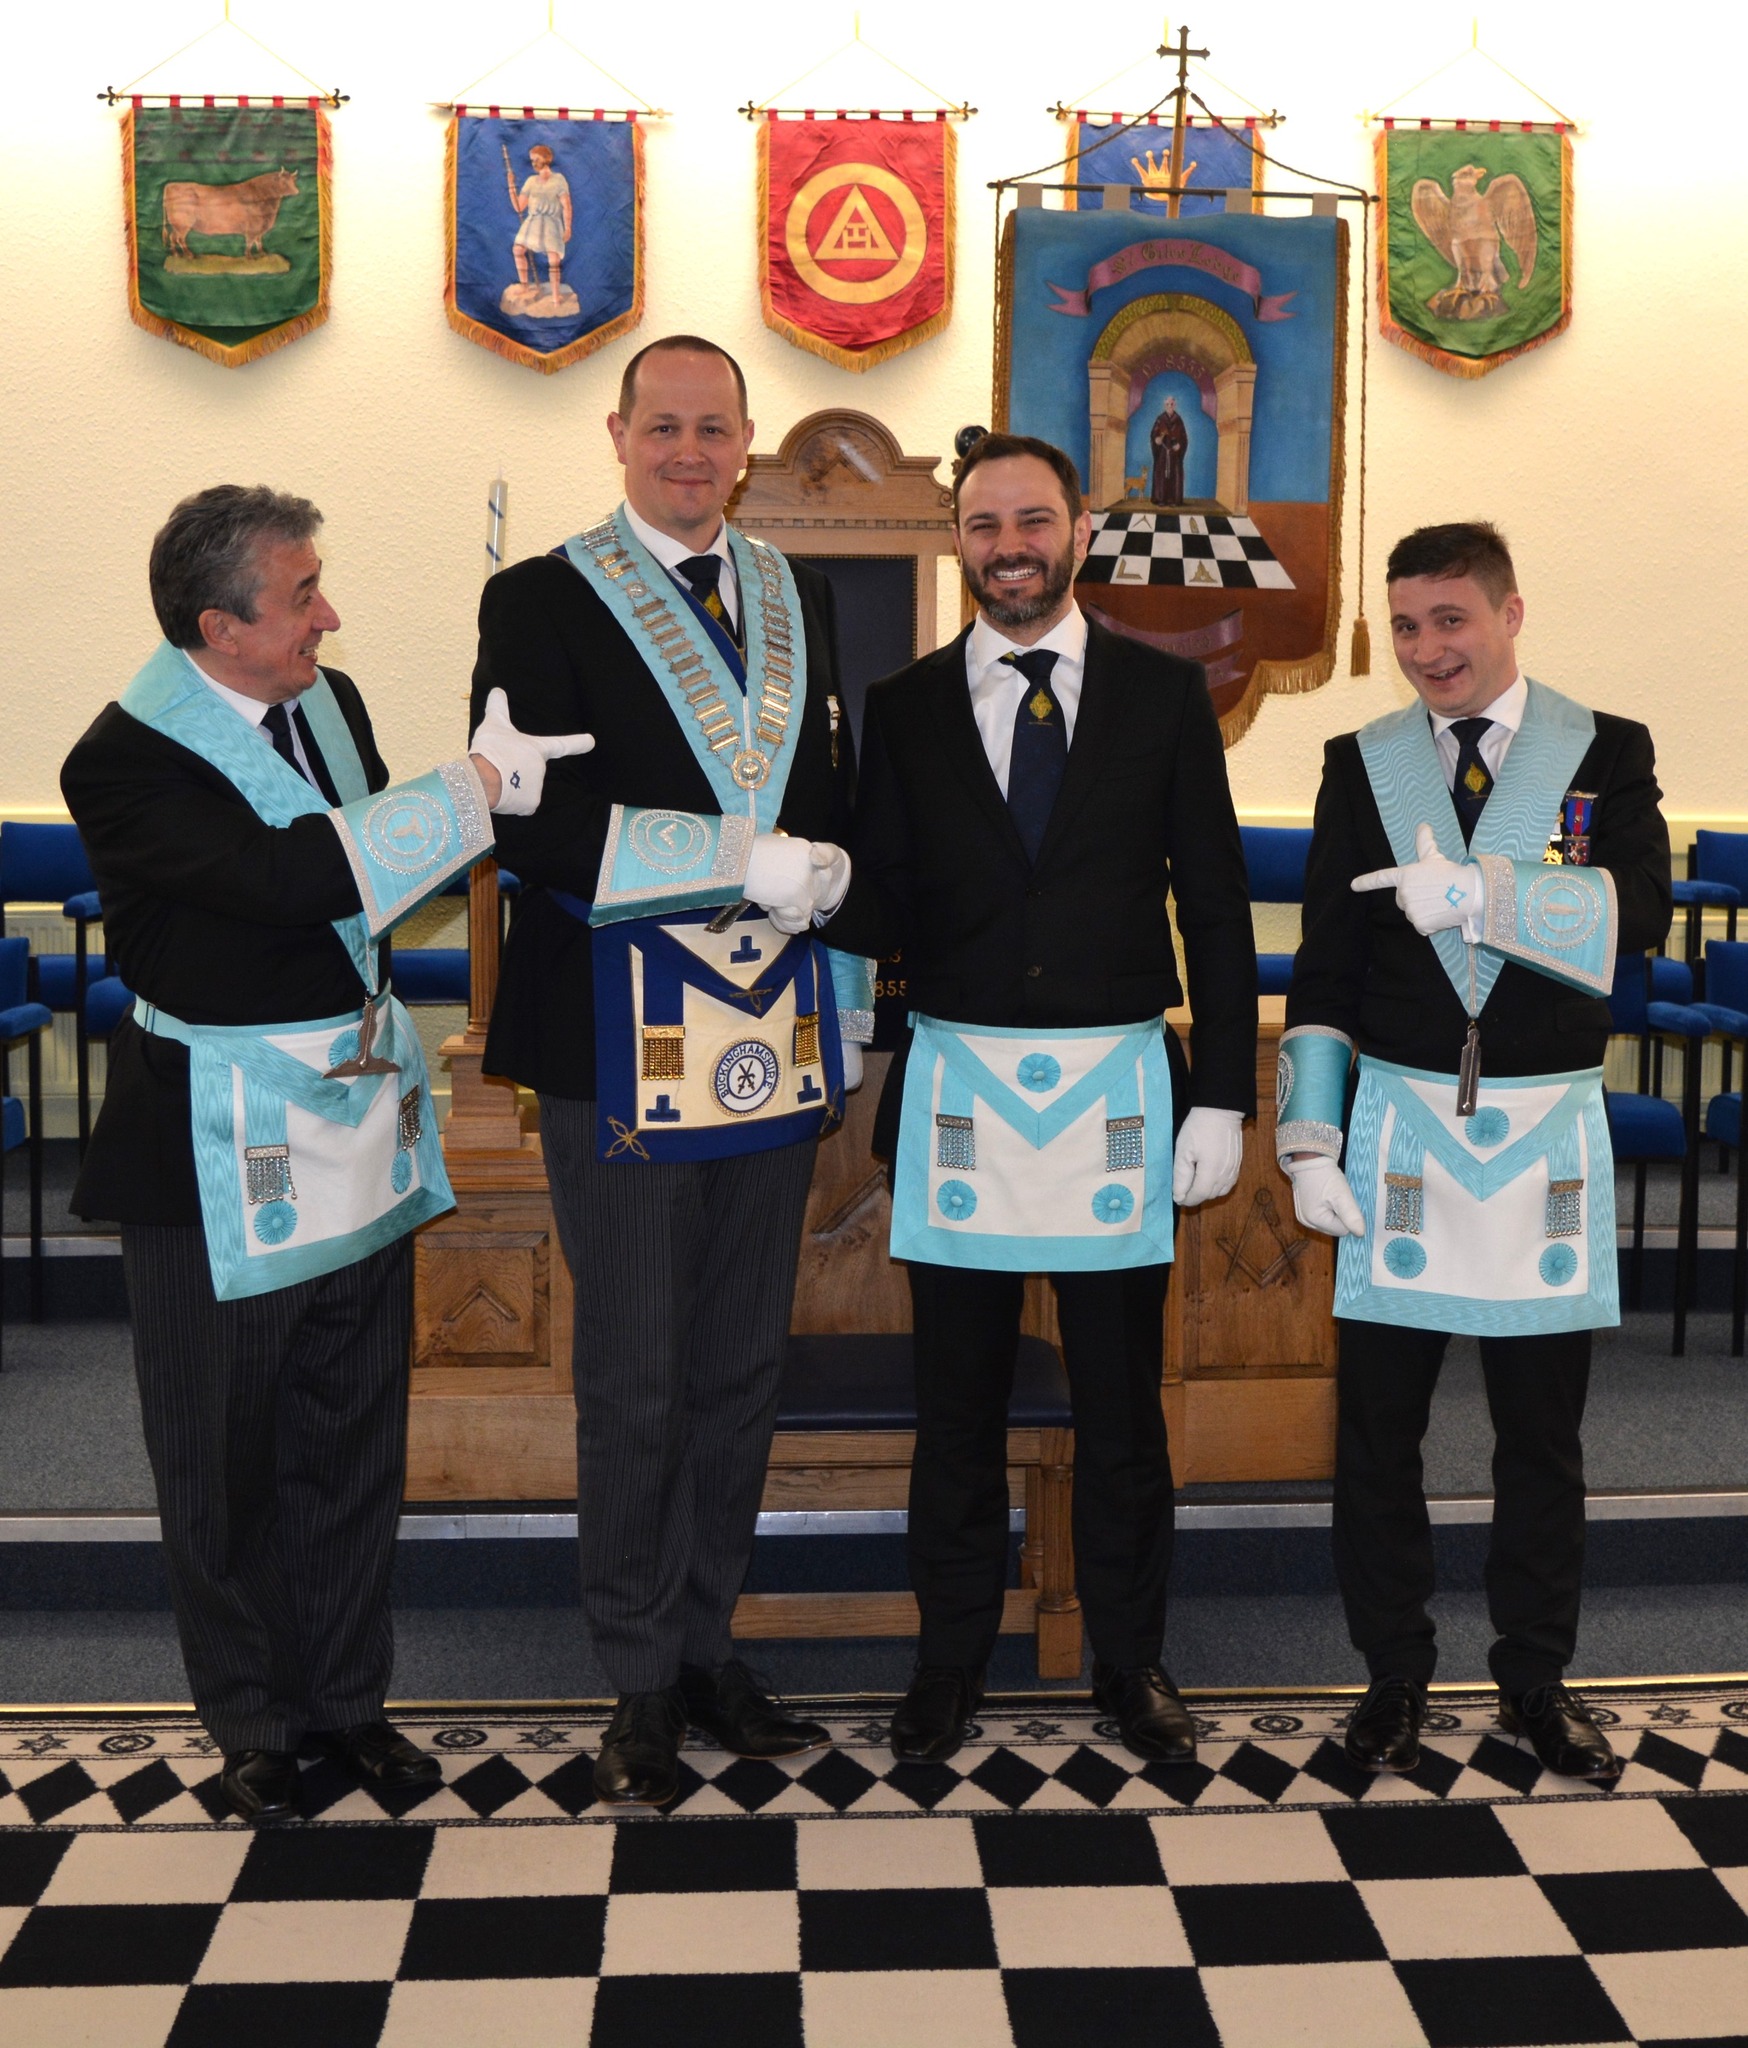 50 years of brotherhood in St Giles!